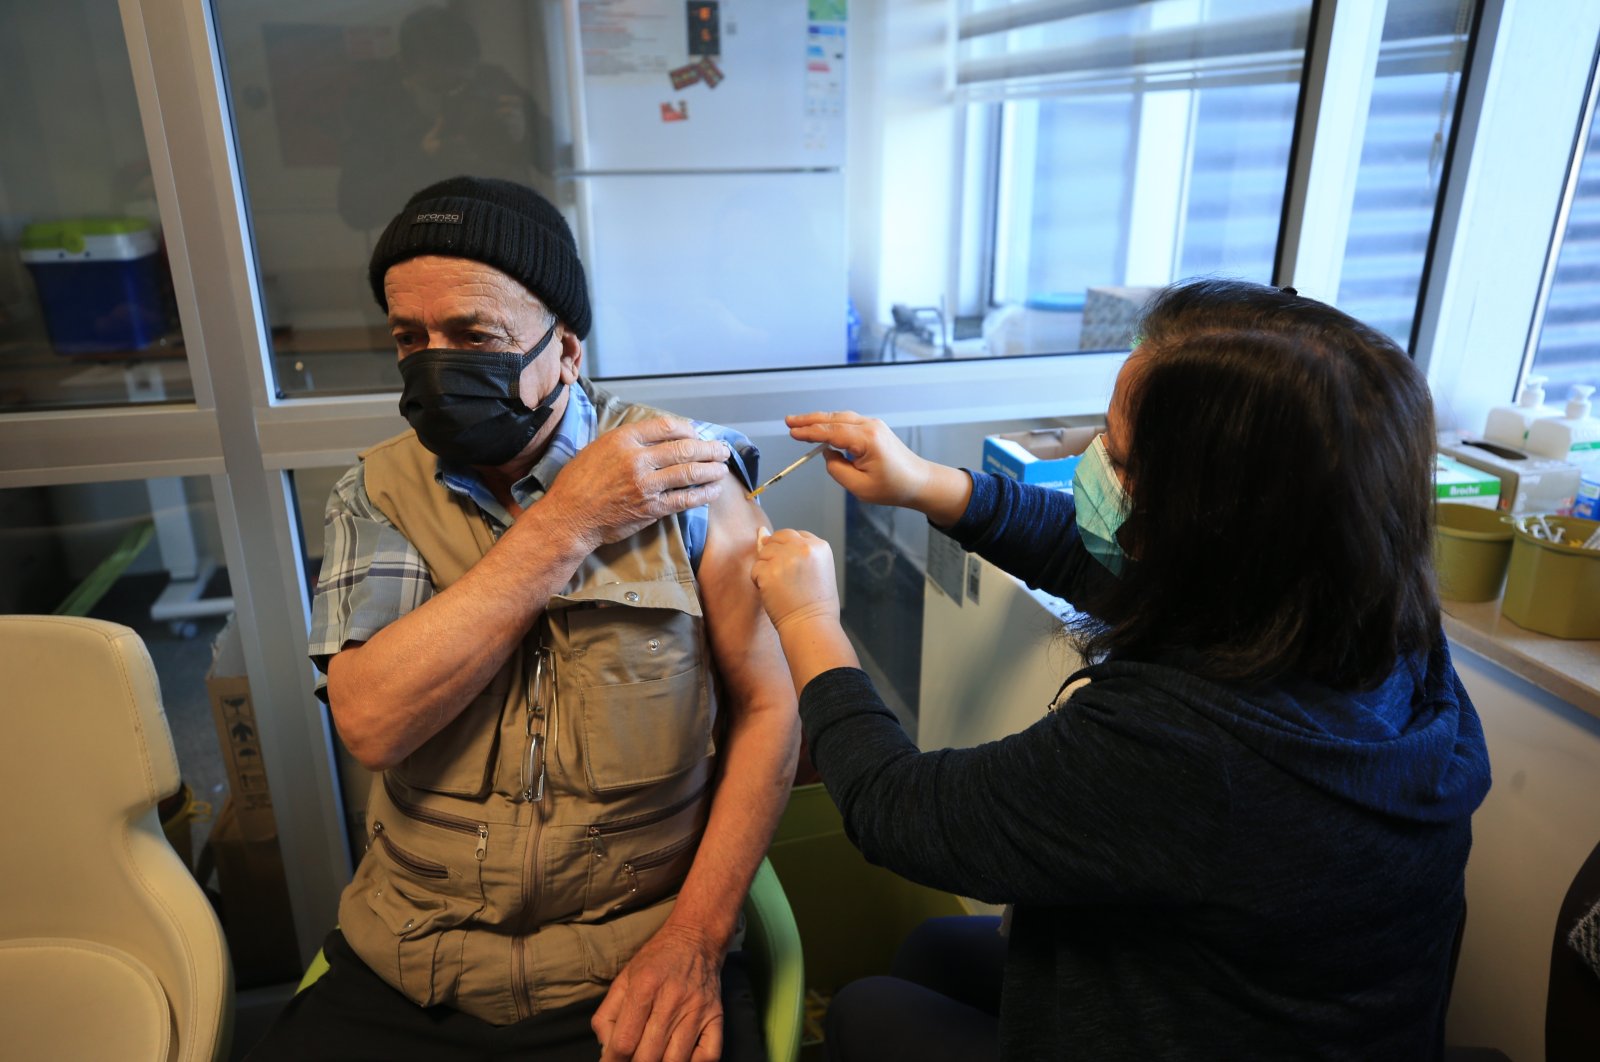 A man gets vaccinated against COVID-19 at a hospital, in Kırklareli, northwestern Turkey, Jan. 24, 2022. (AA Photo)